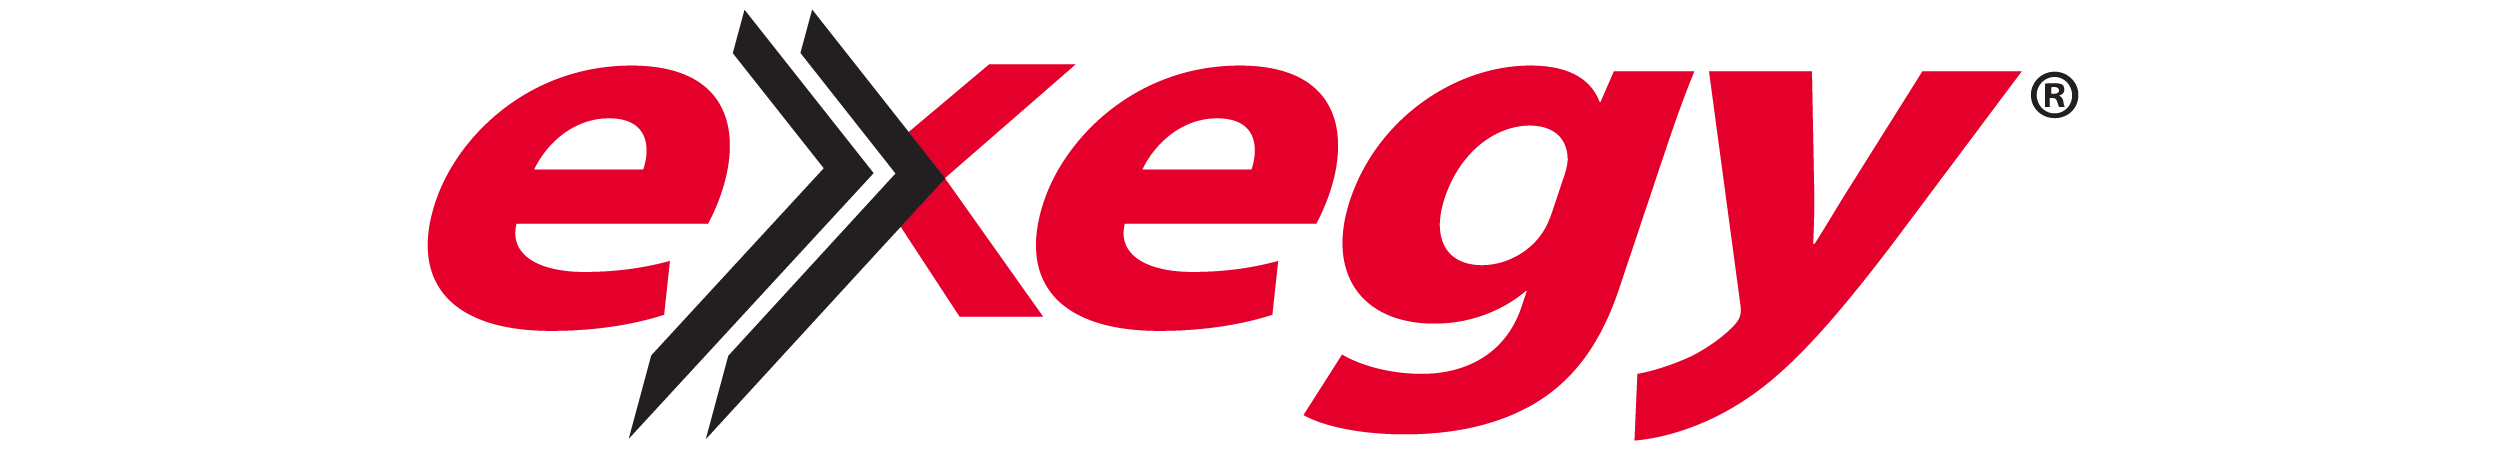 Exegy_logos_2500x450_red_blk